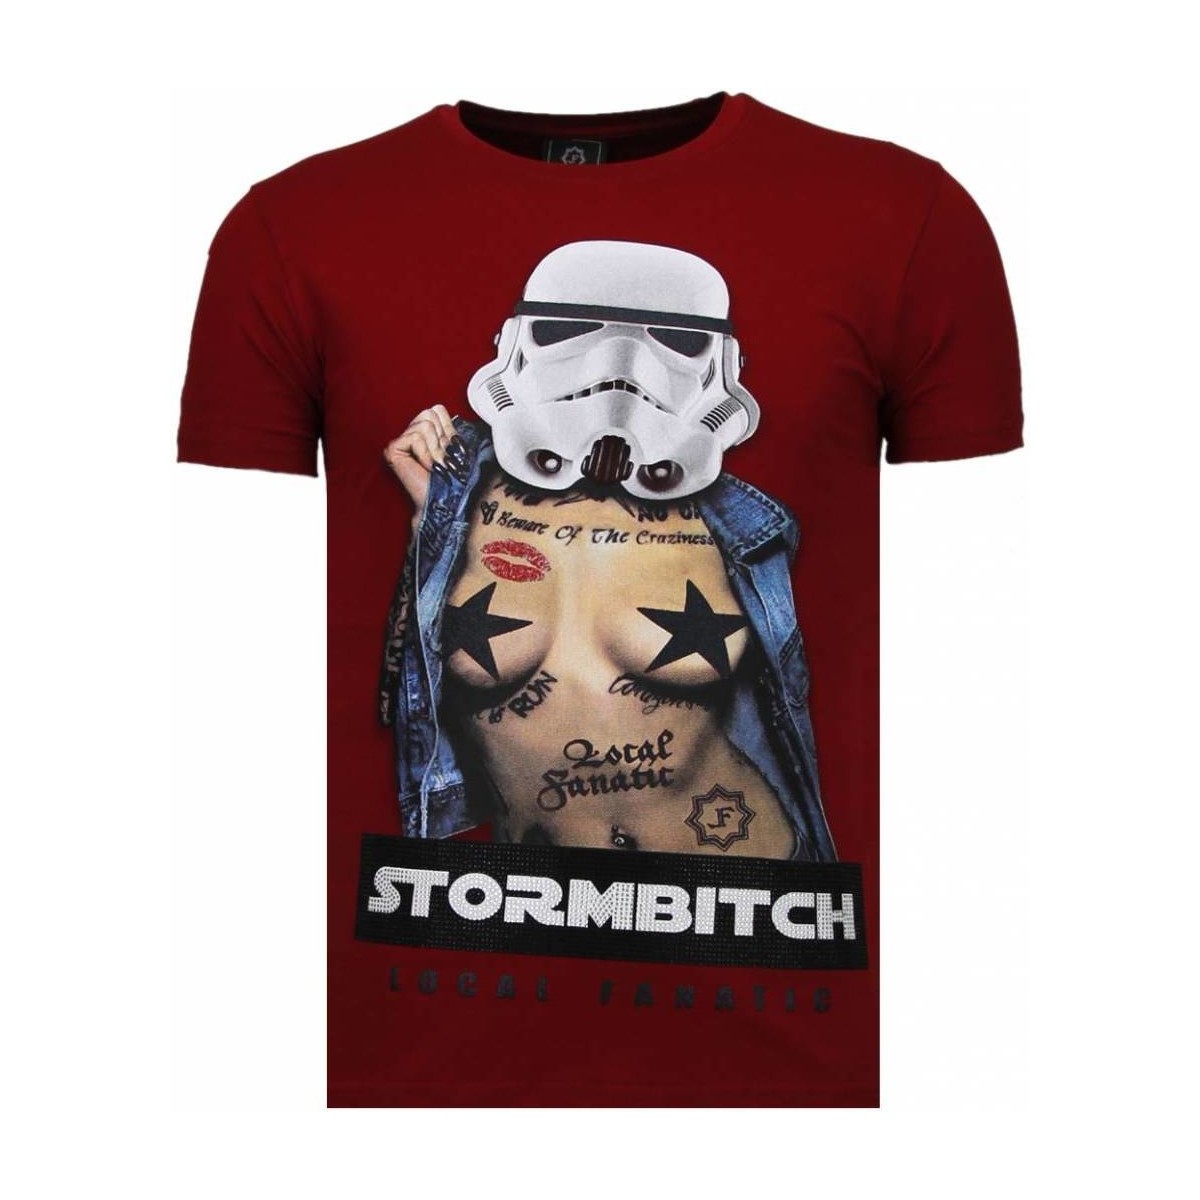 Textiel Heren T-shirts korte mouwen Local Fanatic Stormbitch Rhinestone Rood